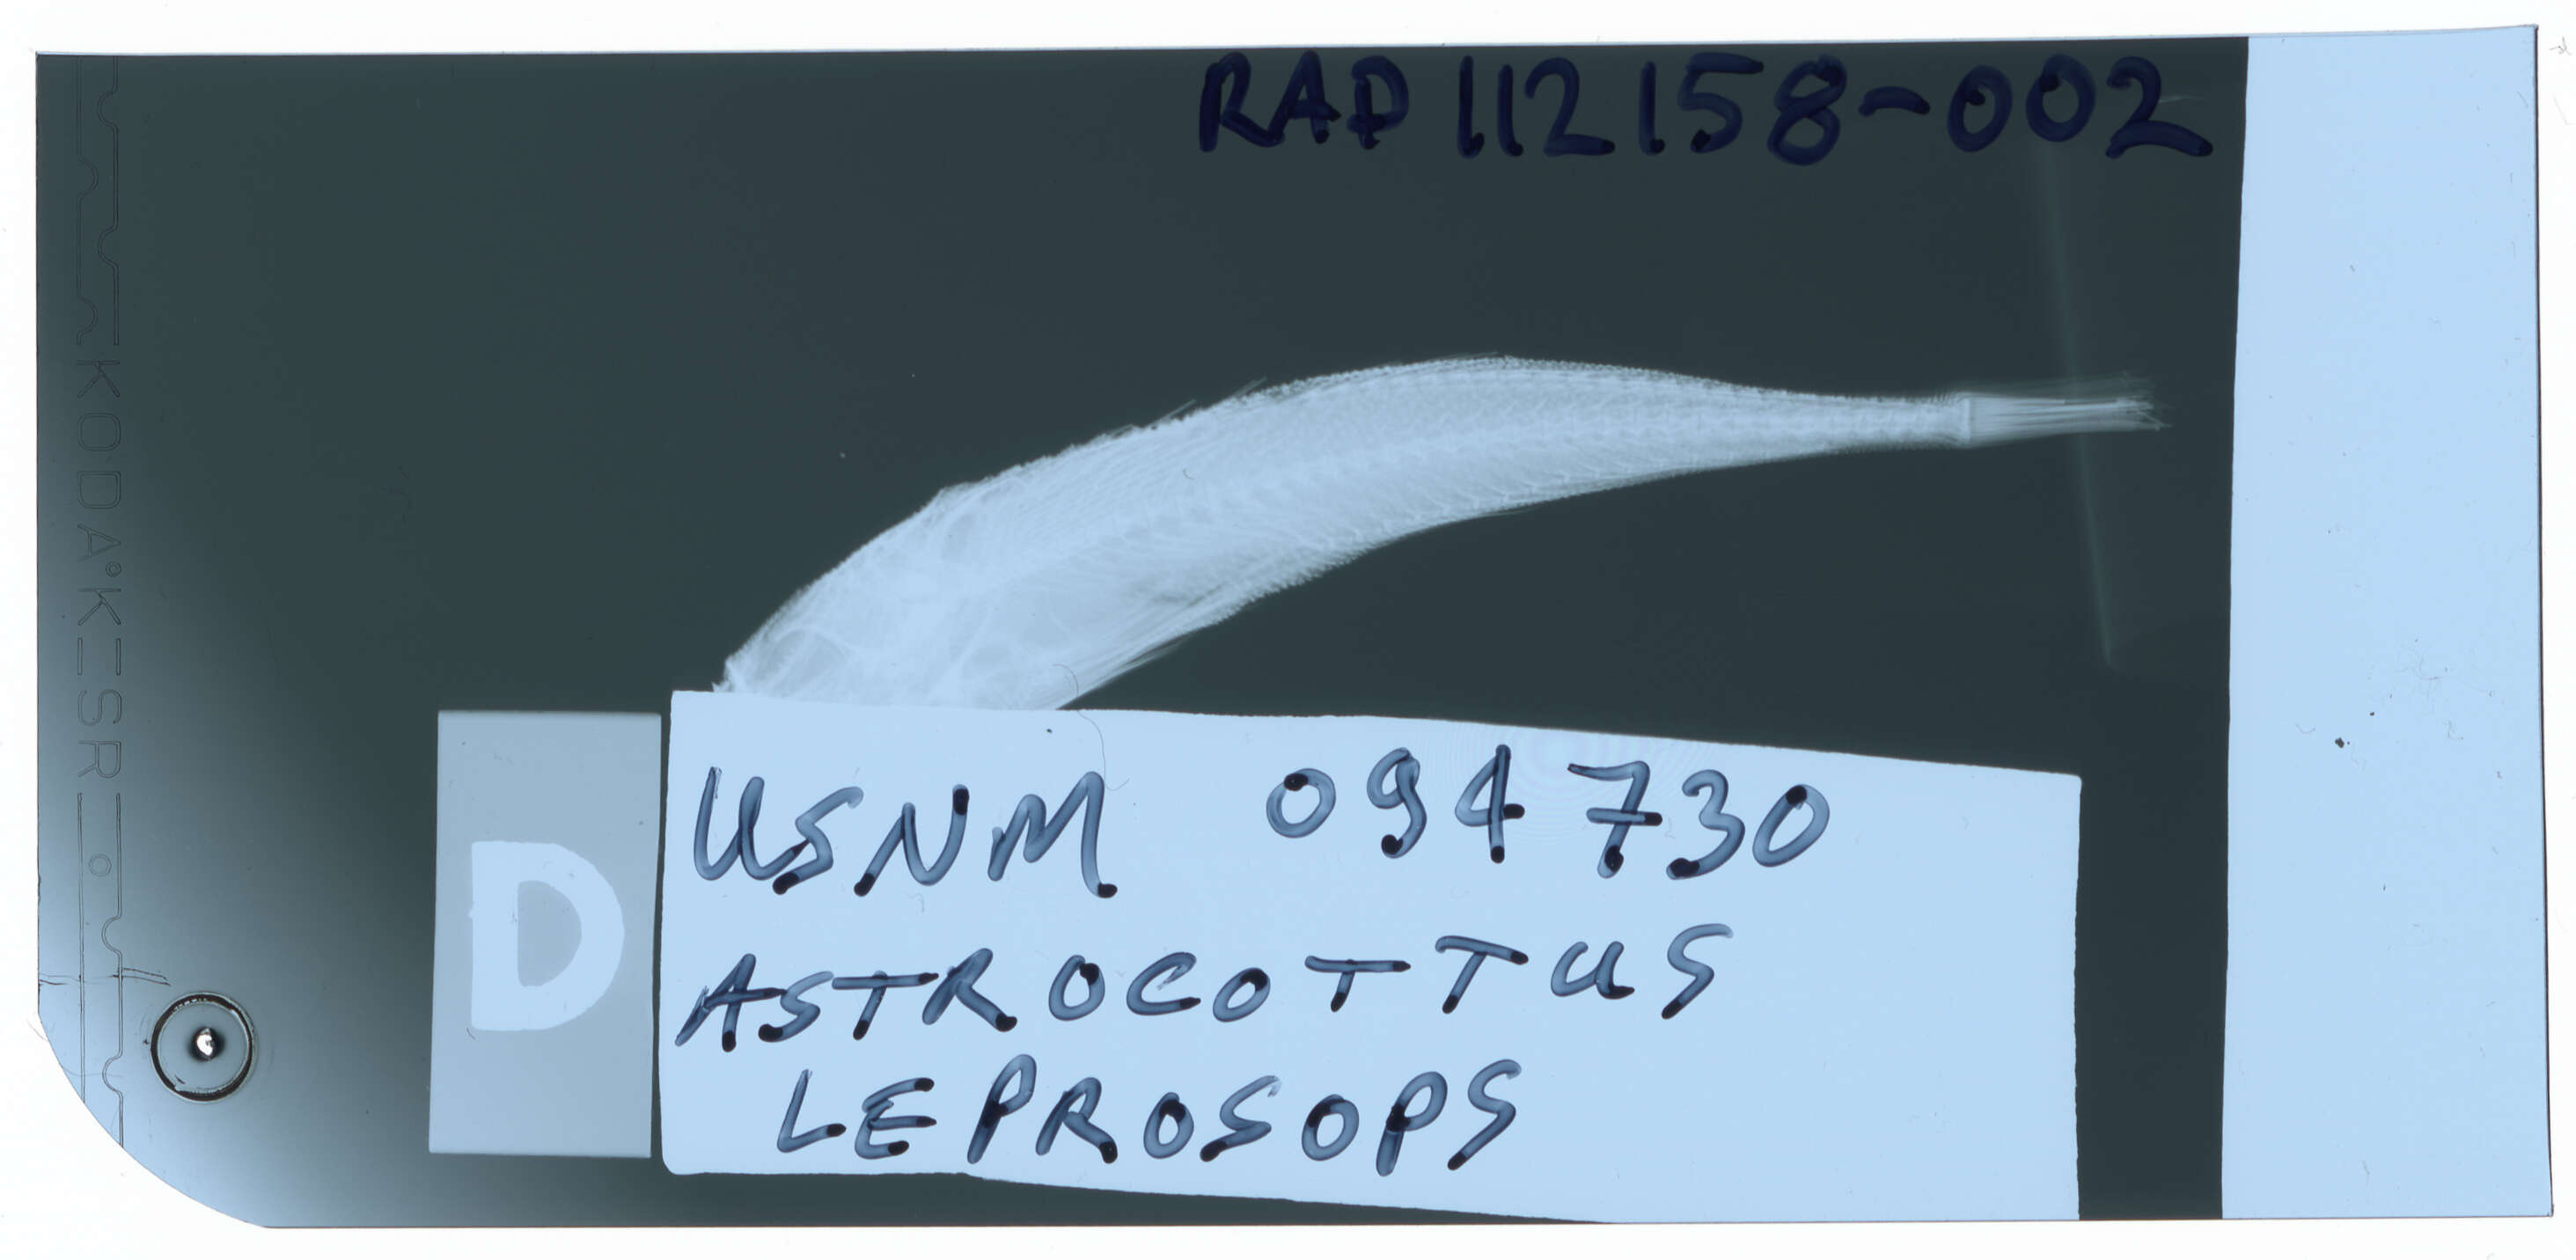 Image of Astrocottus